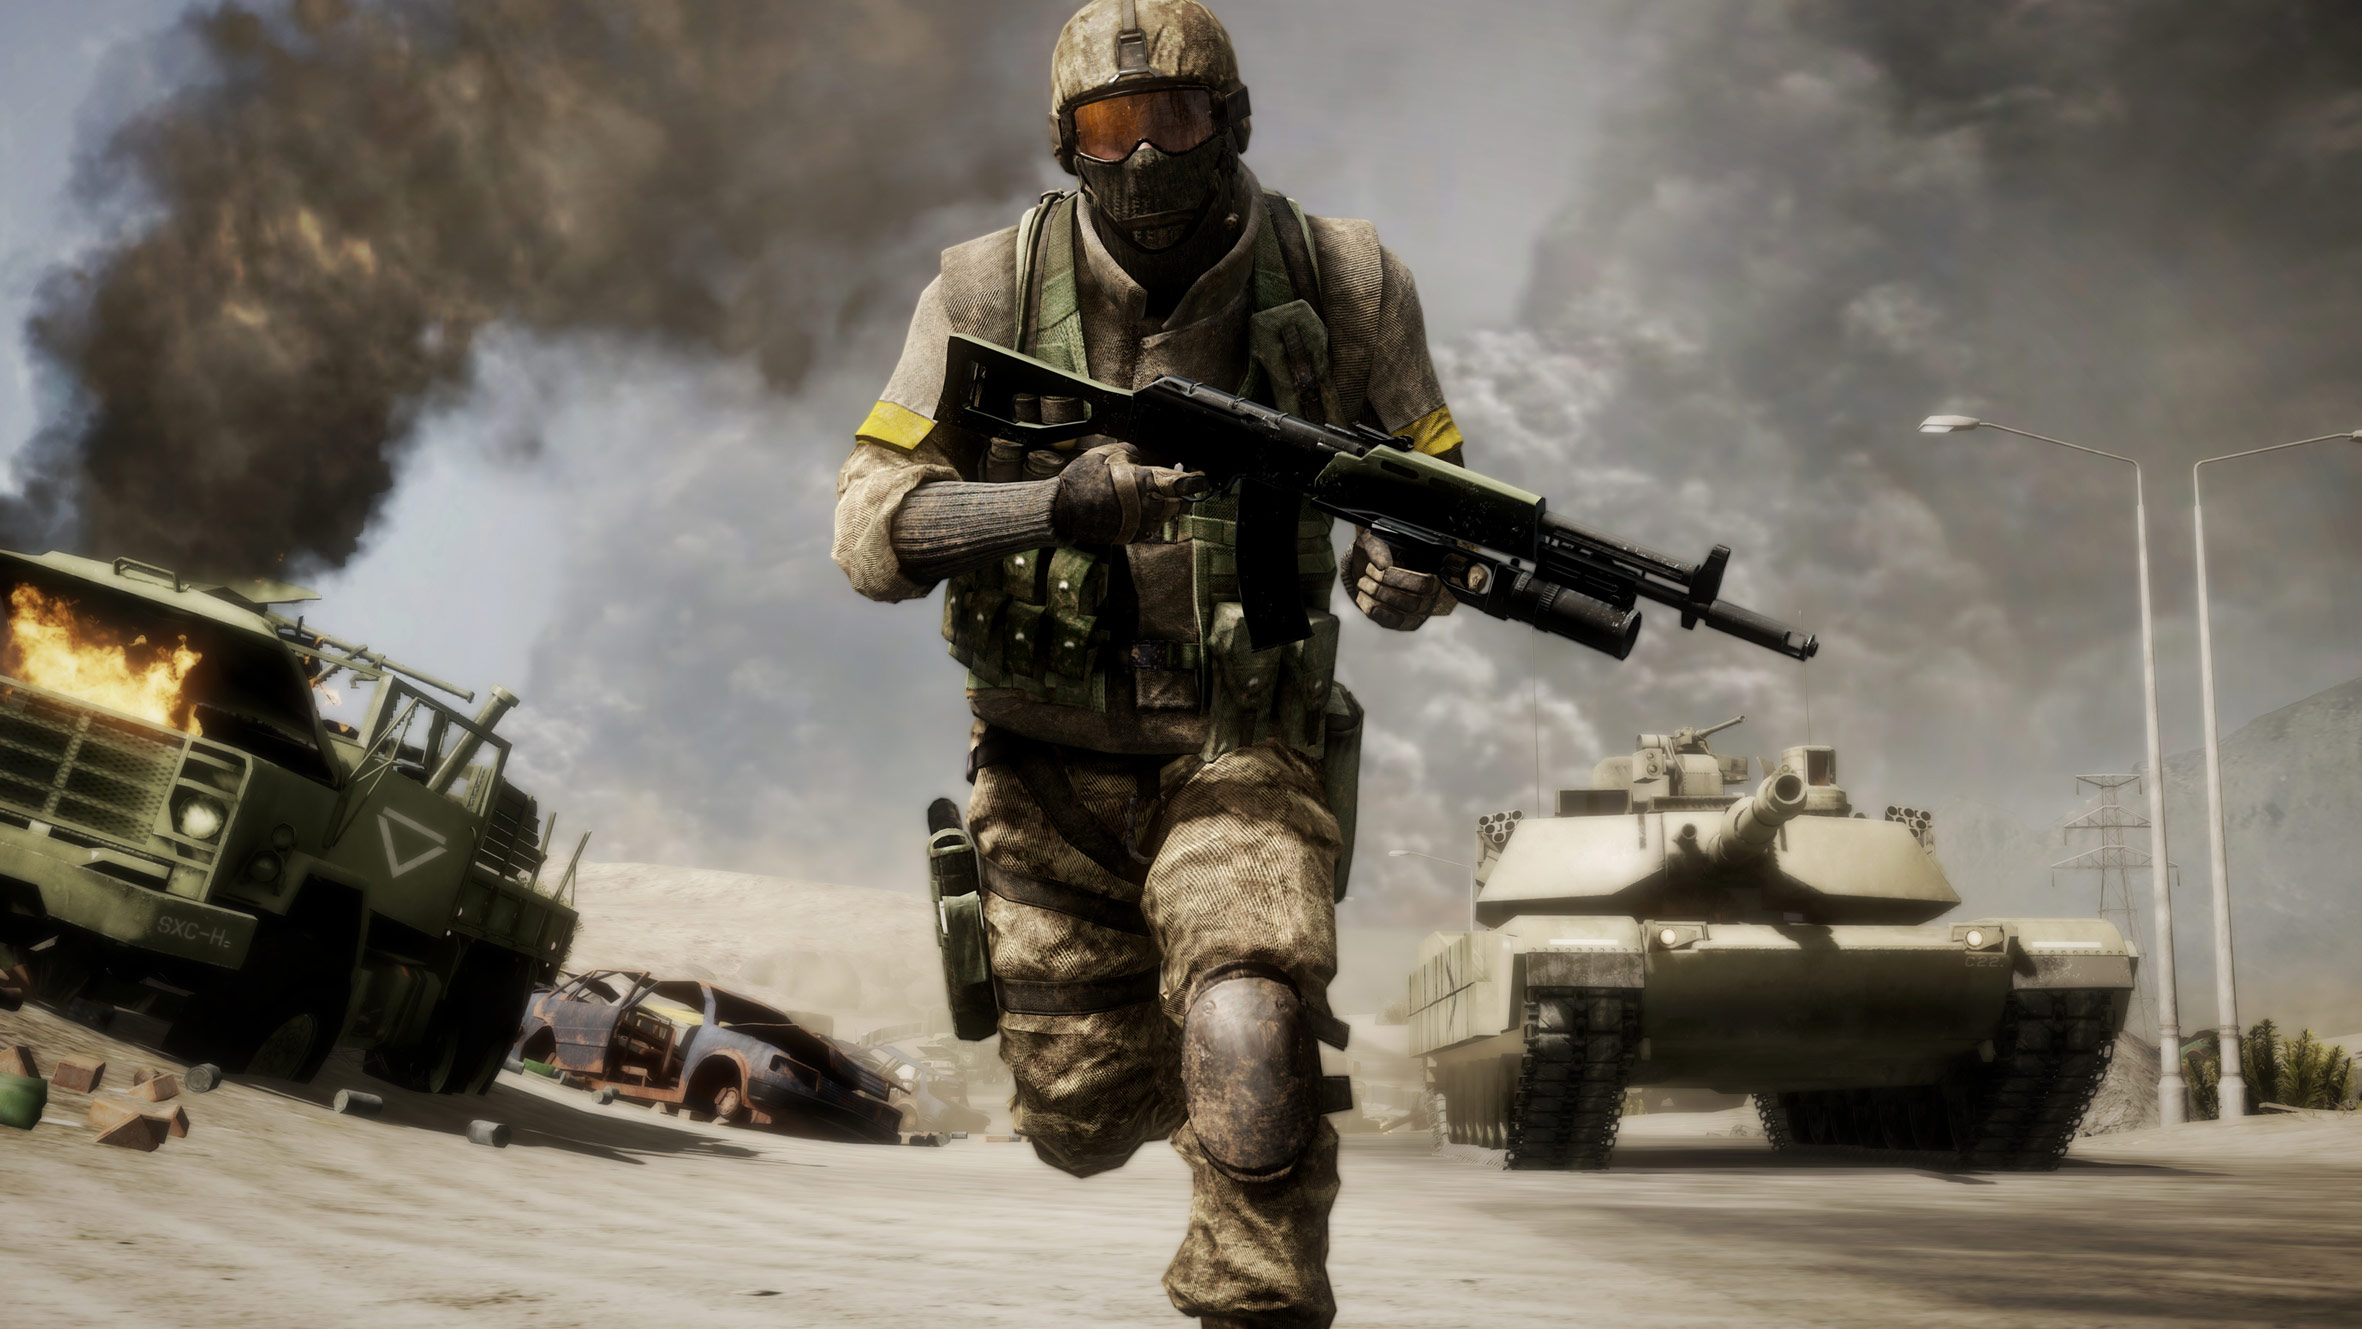 Battlefield Bad Company 2 Wallpaper - Windows 10 Backgrounds